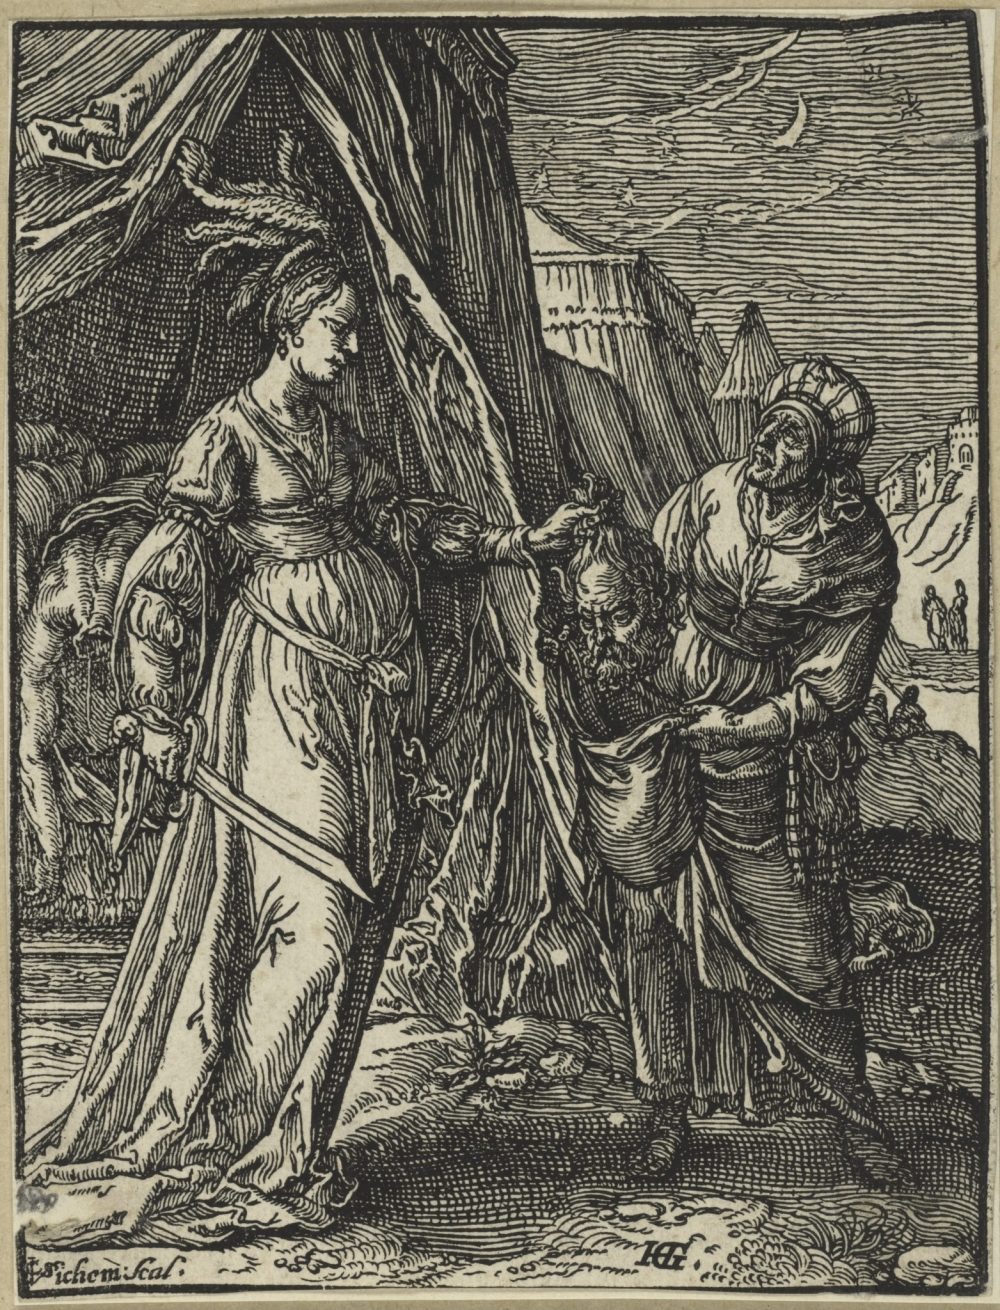 Image Credit: Christoffel van Sichem II (Dutch, 1546 - 1624), Judith with the Head of Holofernes (n.d.) after Hendrik Goltzius (Dutch, 1558 - 1617) woodcut on laid paper sheet: 13.5 x 10.3 cm. Gift of Dr J. Orde Poyton, 1959